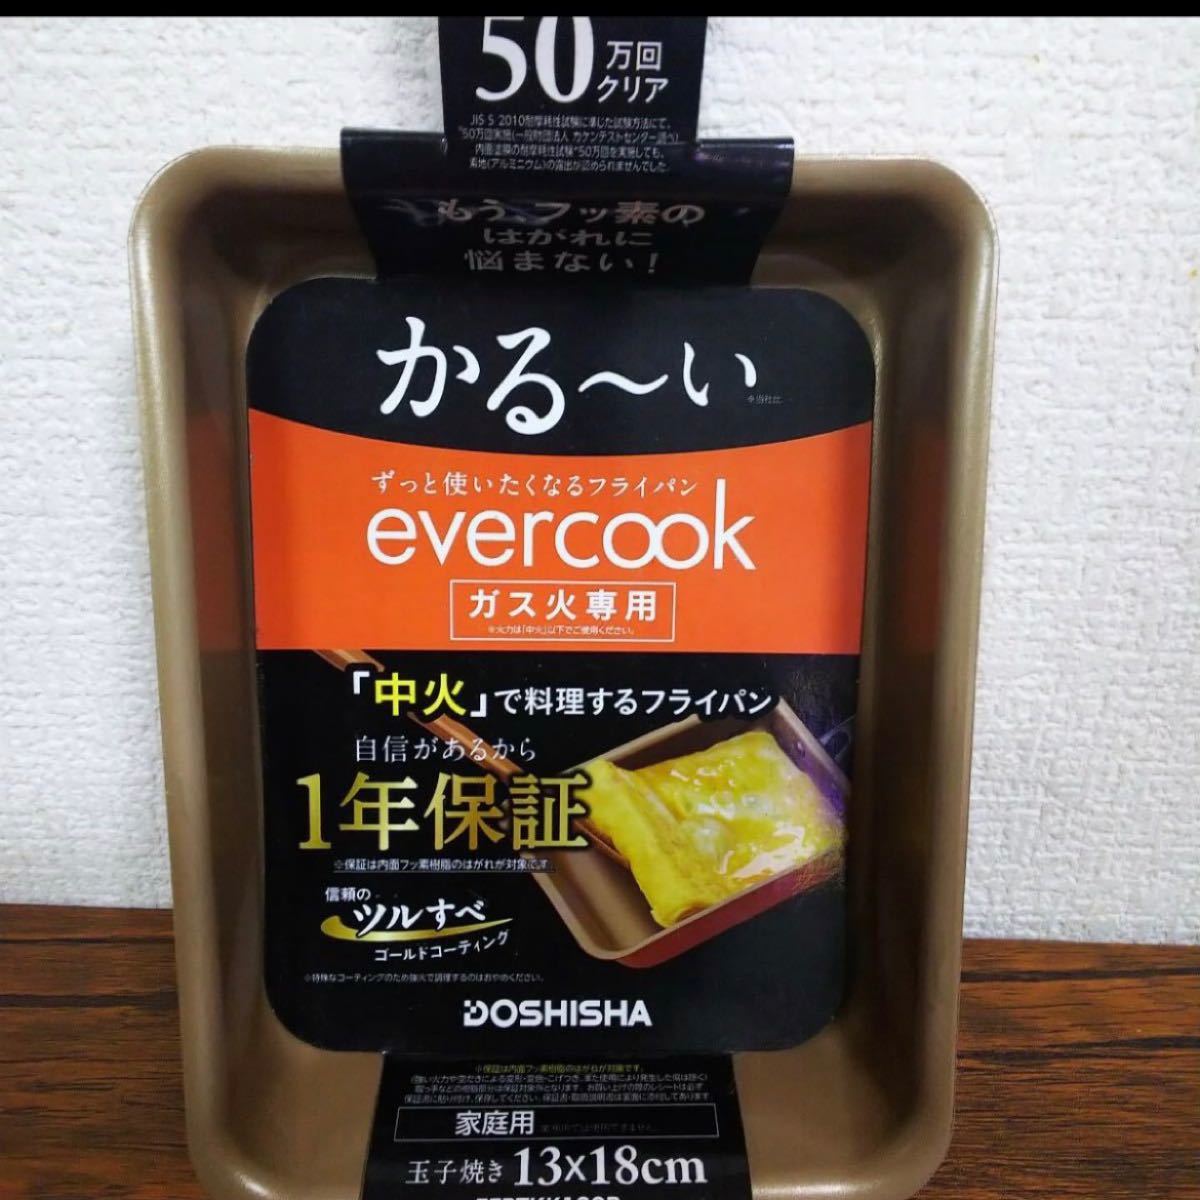 evercook エバークック 玉子焼き用フライパン 13×18cm ガス火専用 